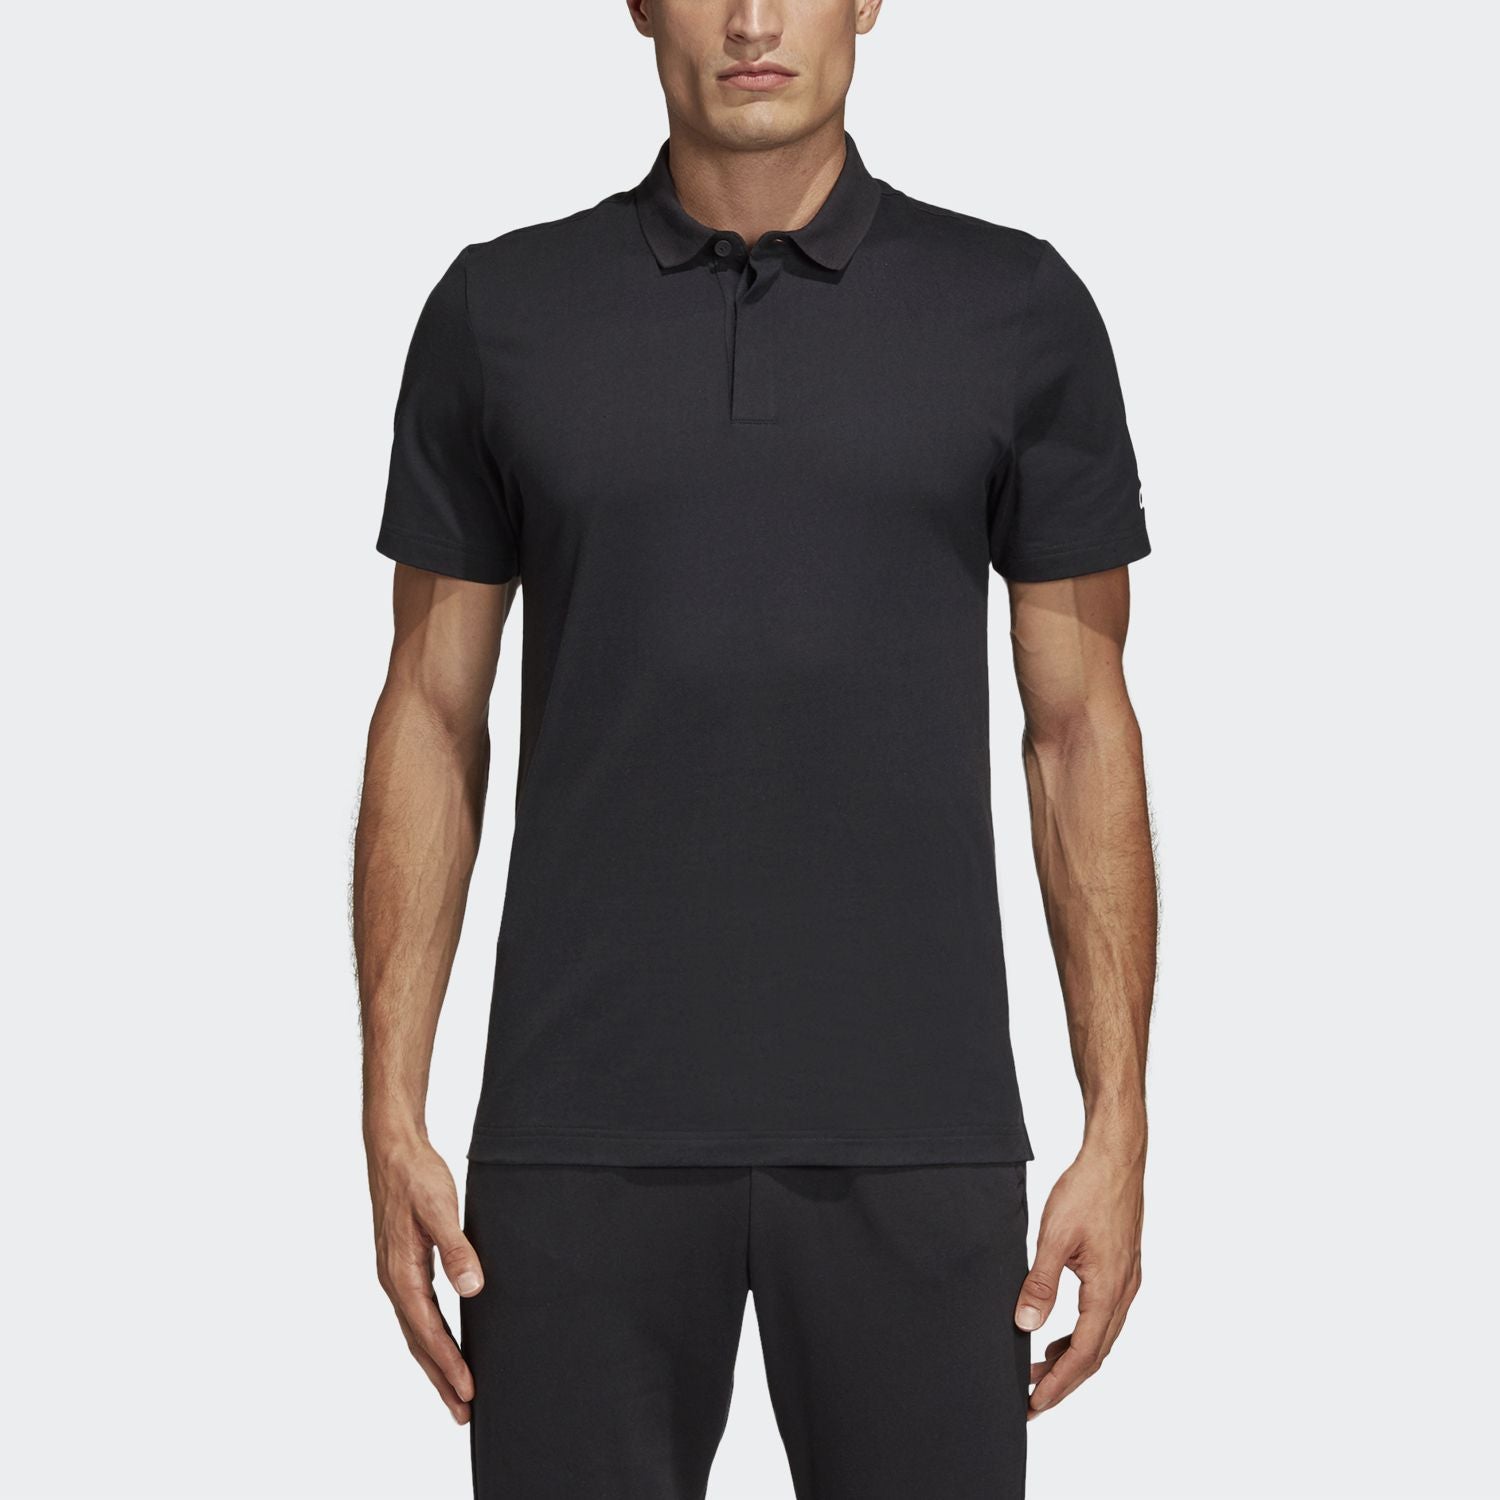 Adidas Men Polo Shirts Black - Oshoplin